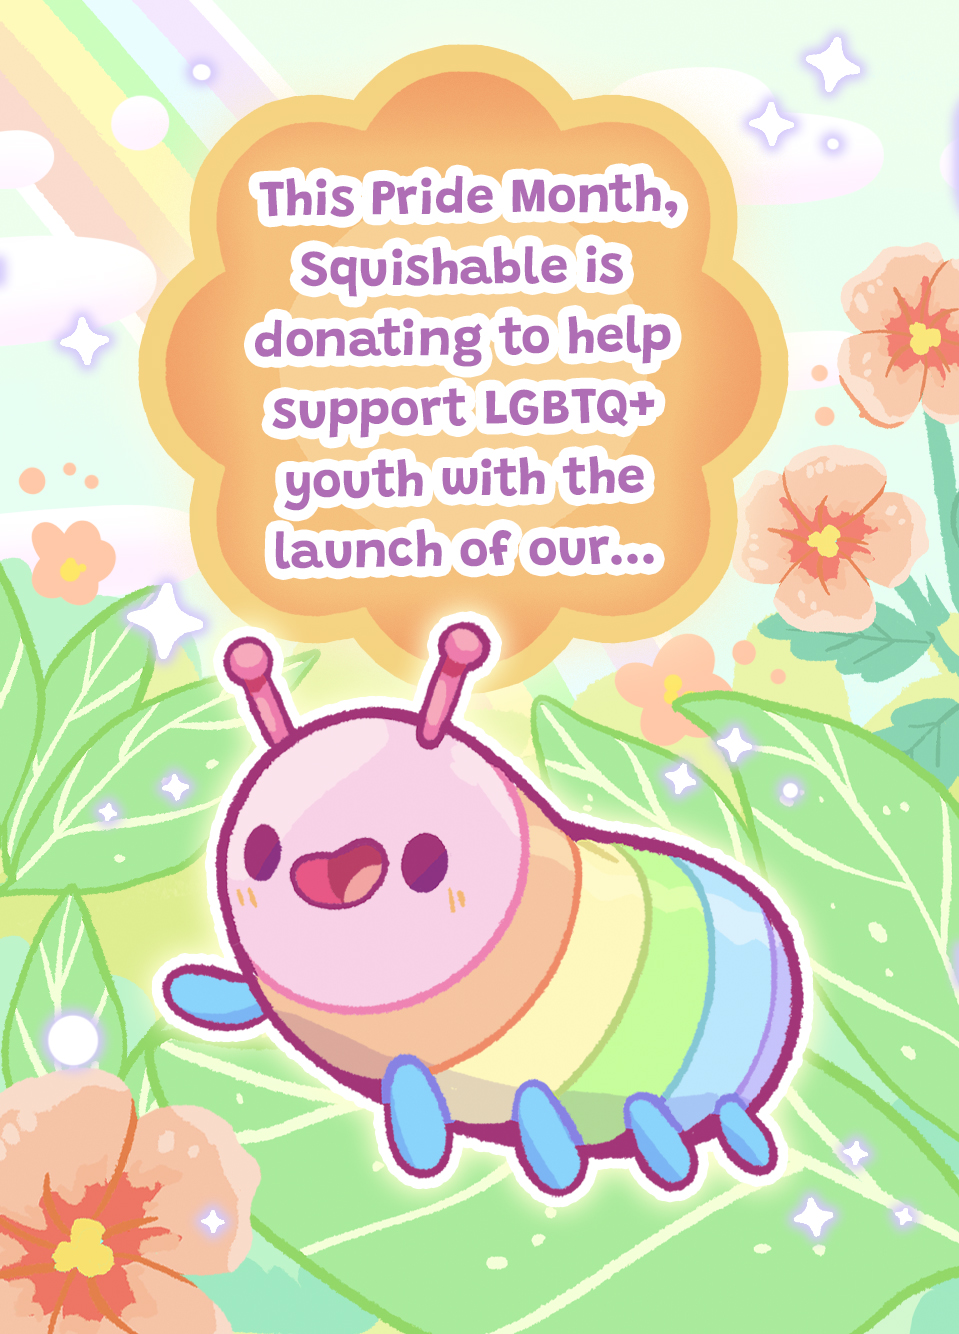 Mini Rainbow Caterpillar charity image